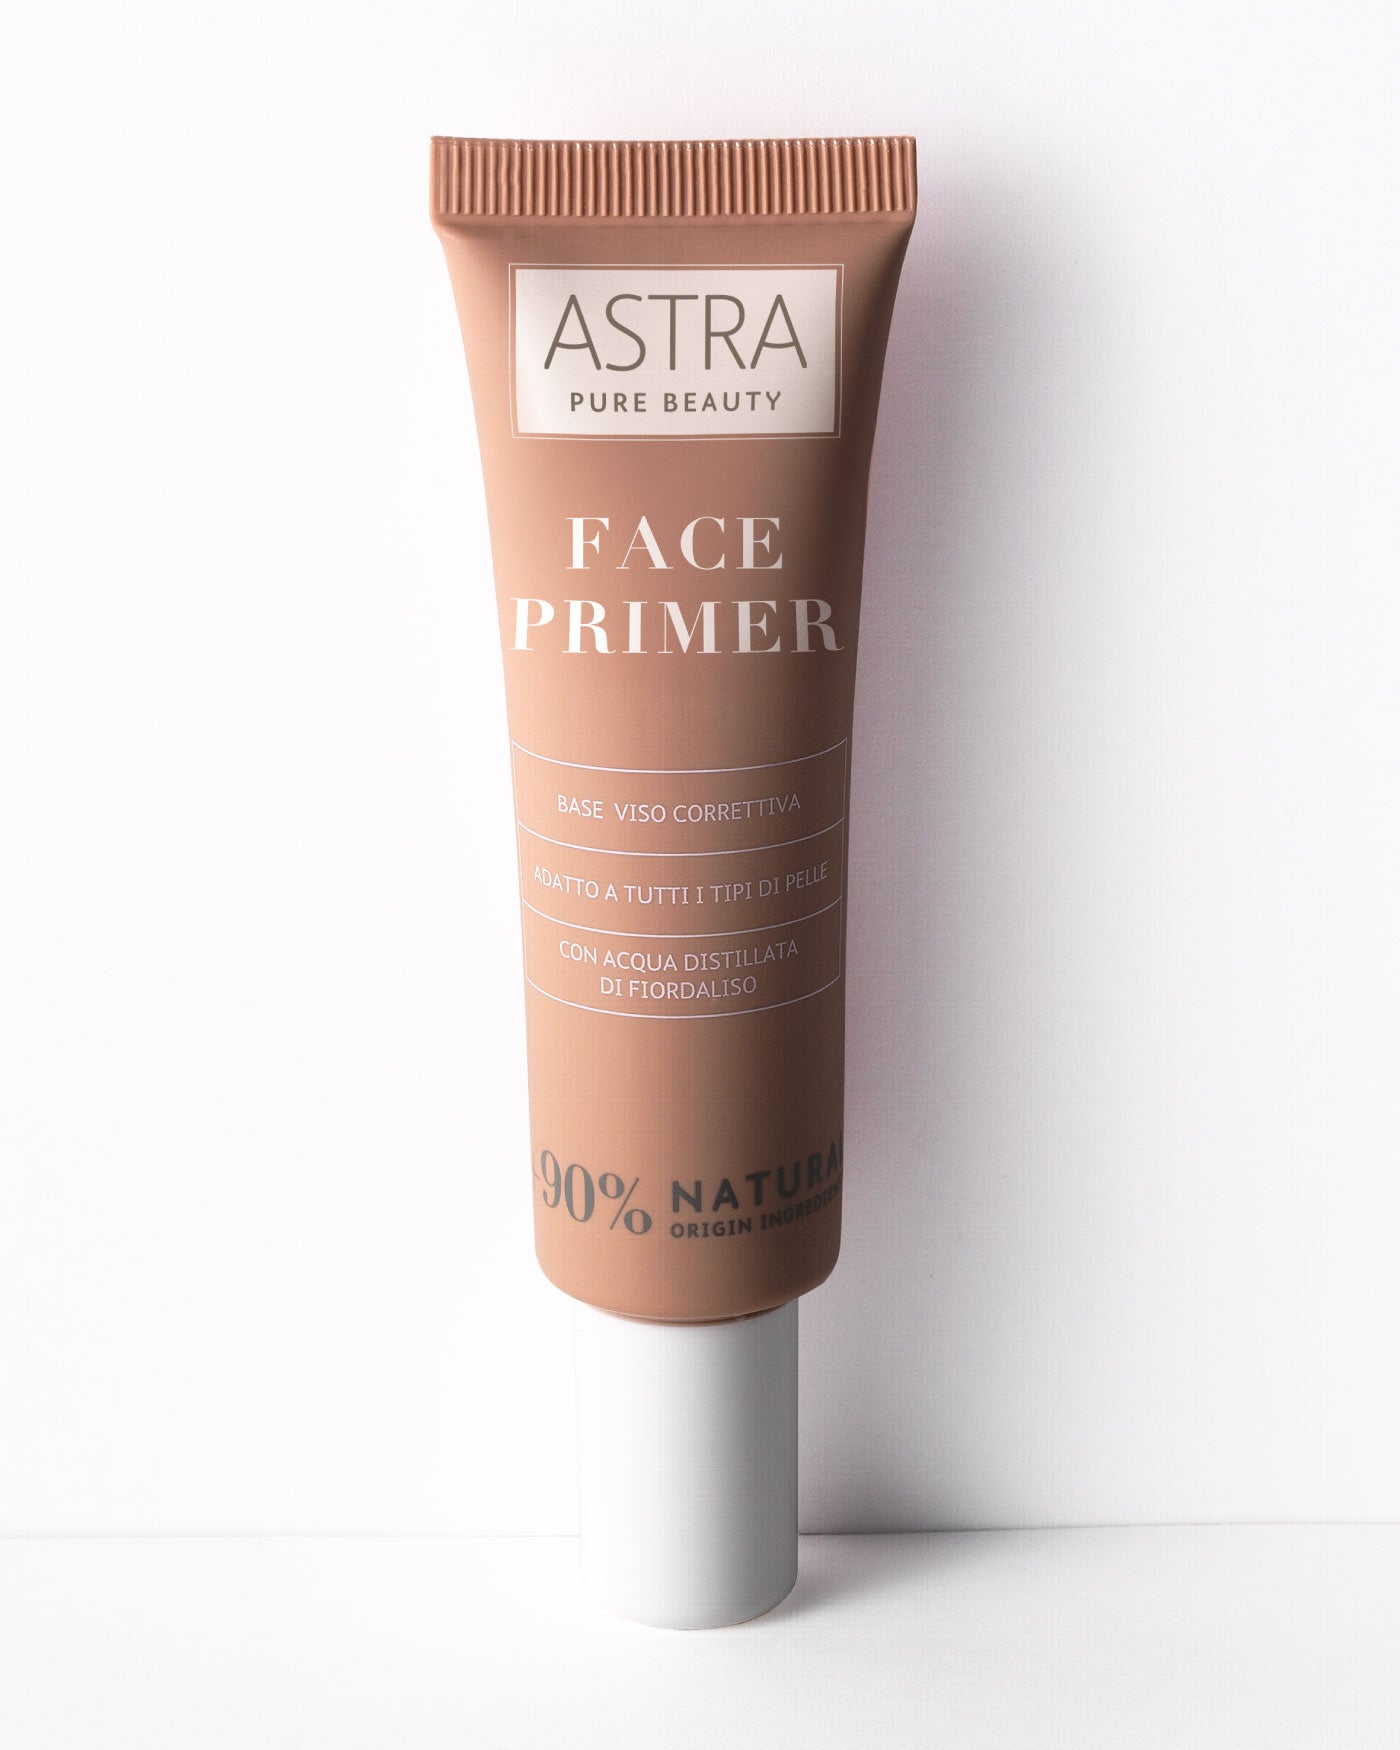 PURE BEAUTY FACE PRIMER - 01 - Matcha - Astra Make-Up